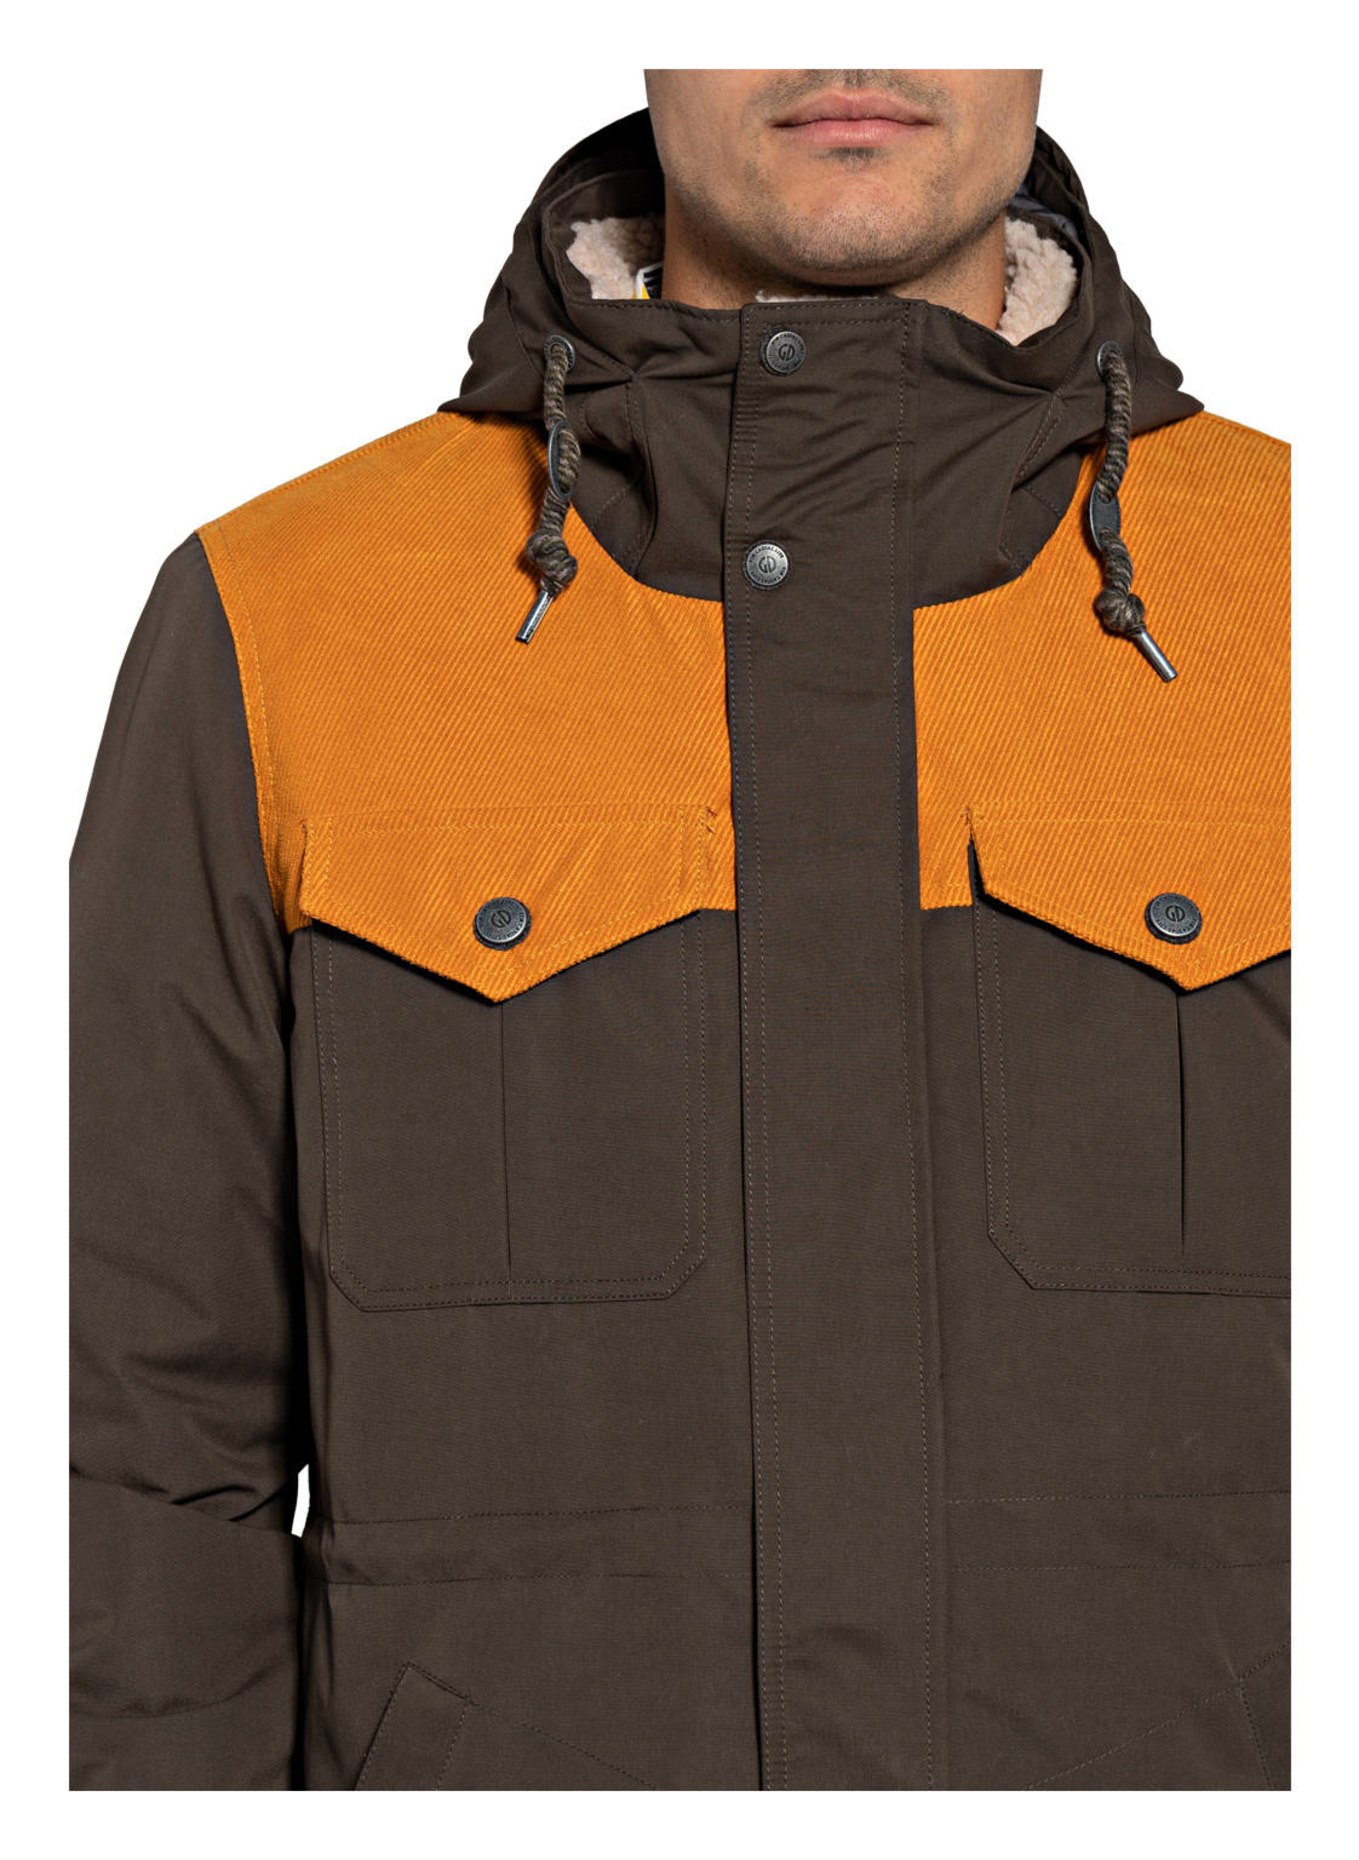 Outdoor dark G.I.G.A. in killtec by STORMIGA jacket orange DX brown/